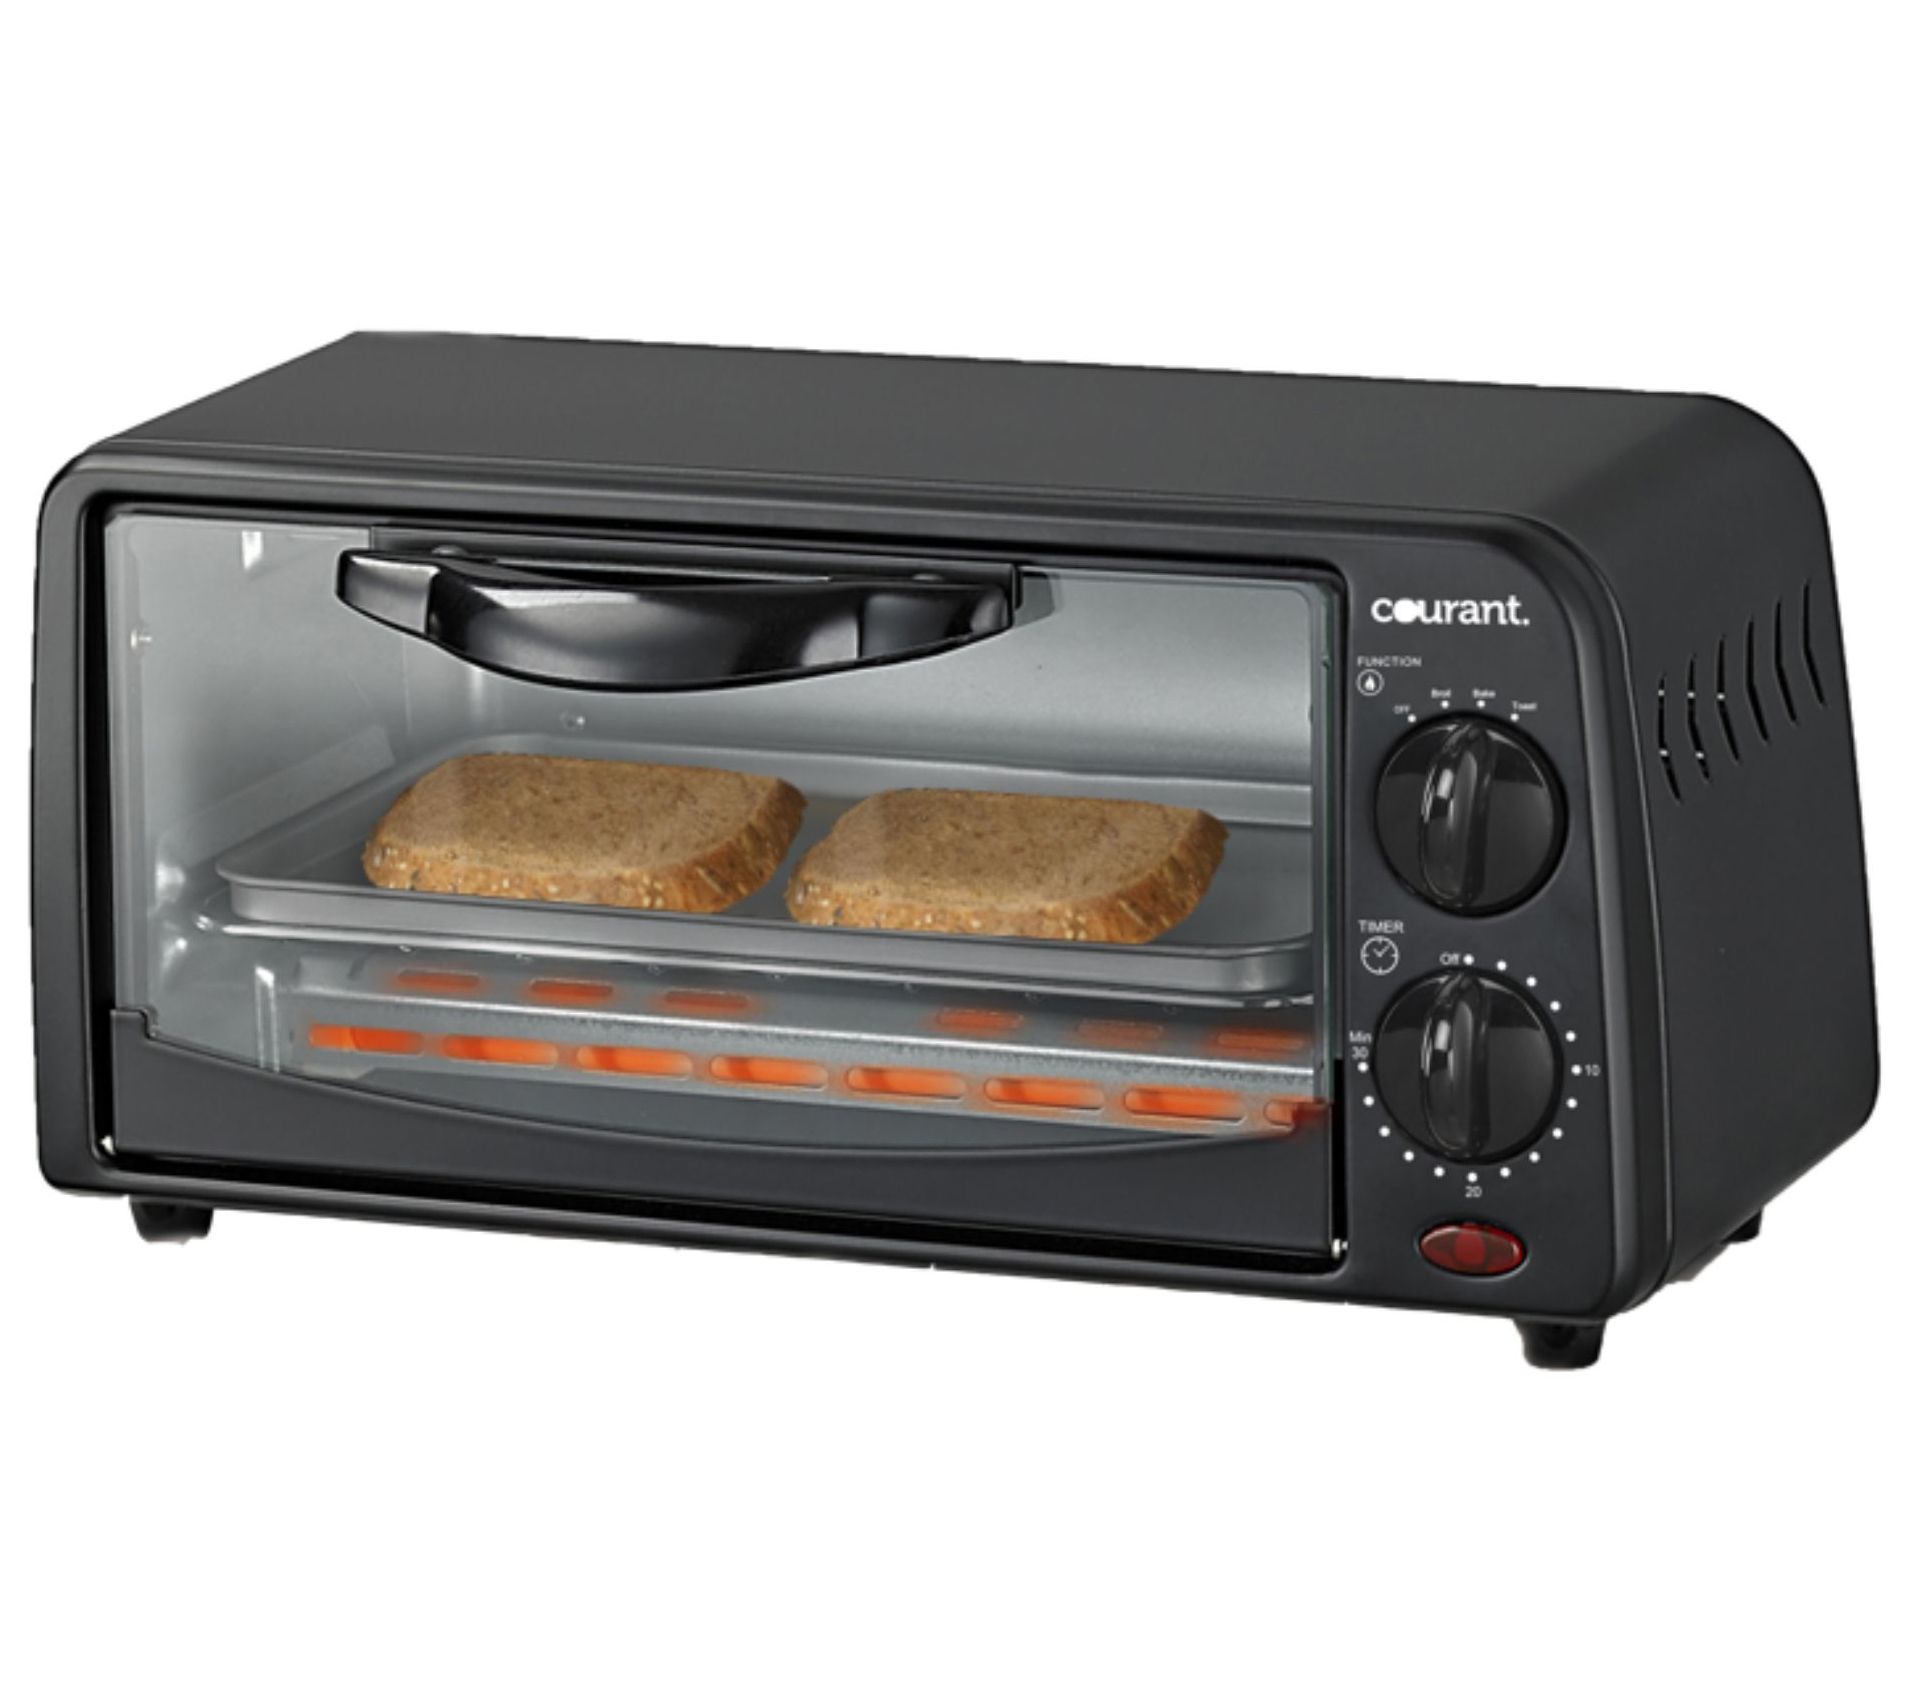 Americana by Elite 8-Slice 33L Retro Toaster Oven 